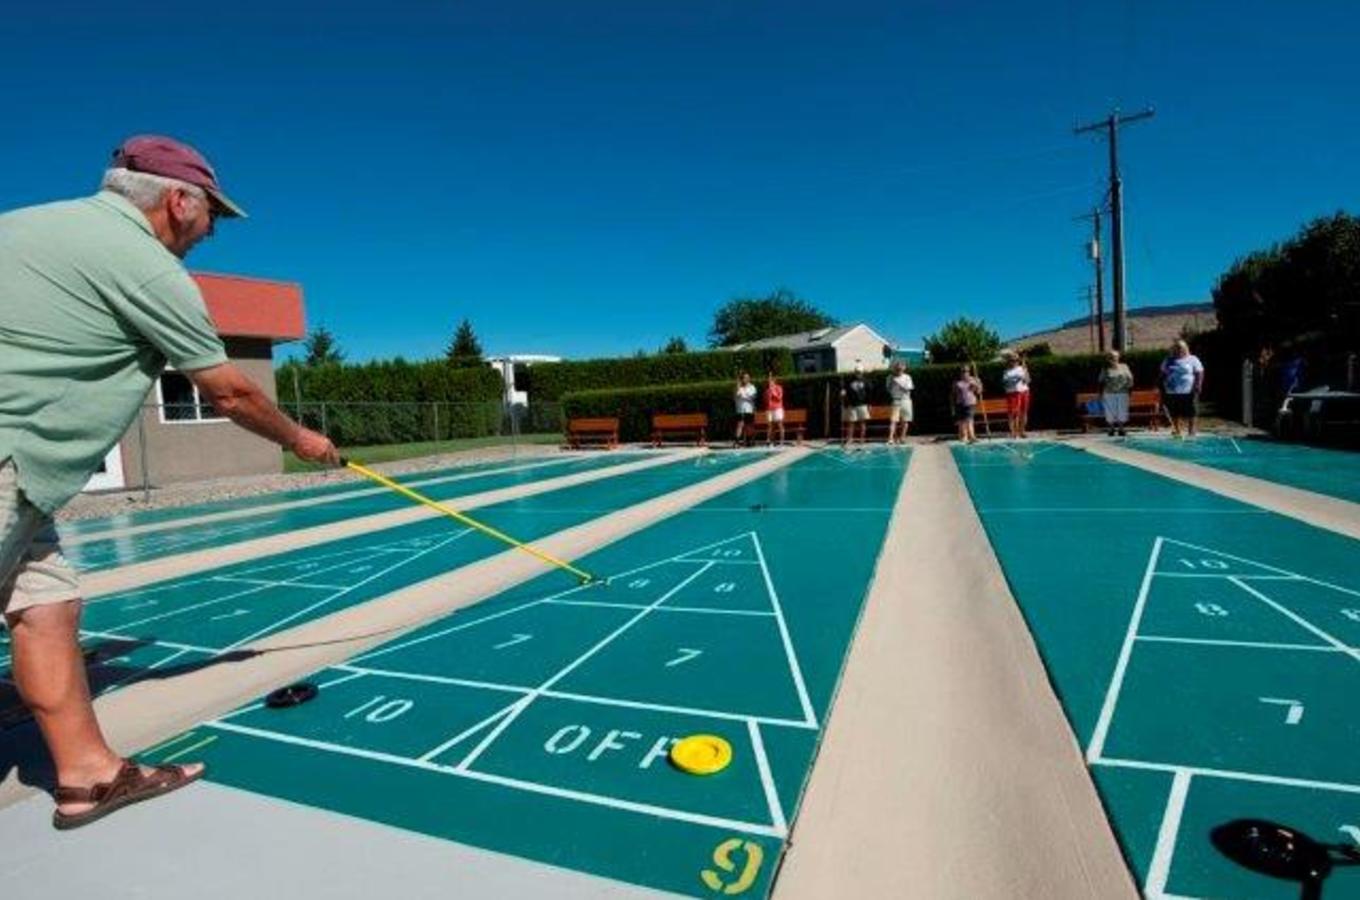 Holiday Park Resort shuffleboard court